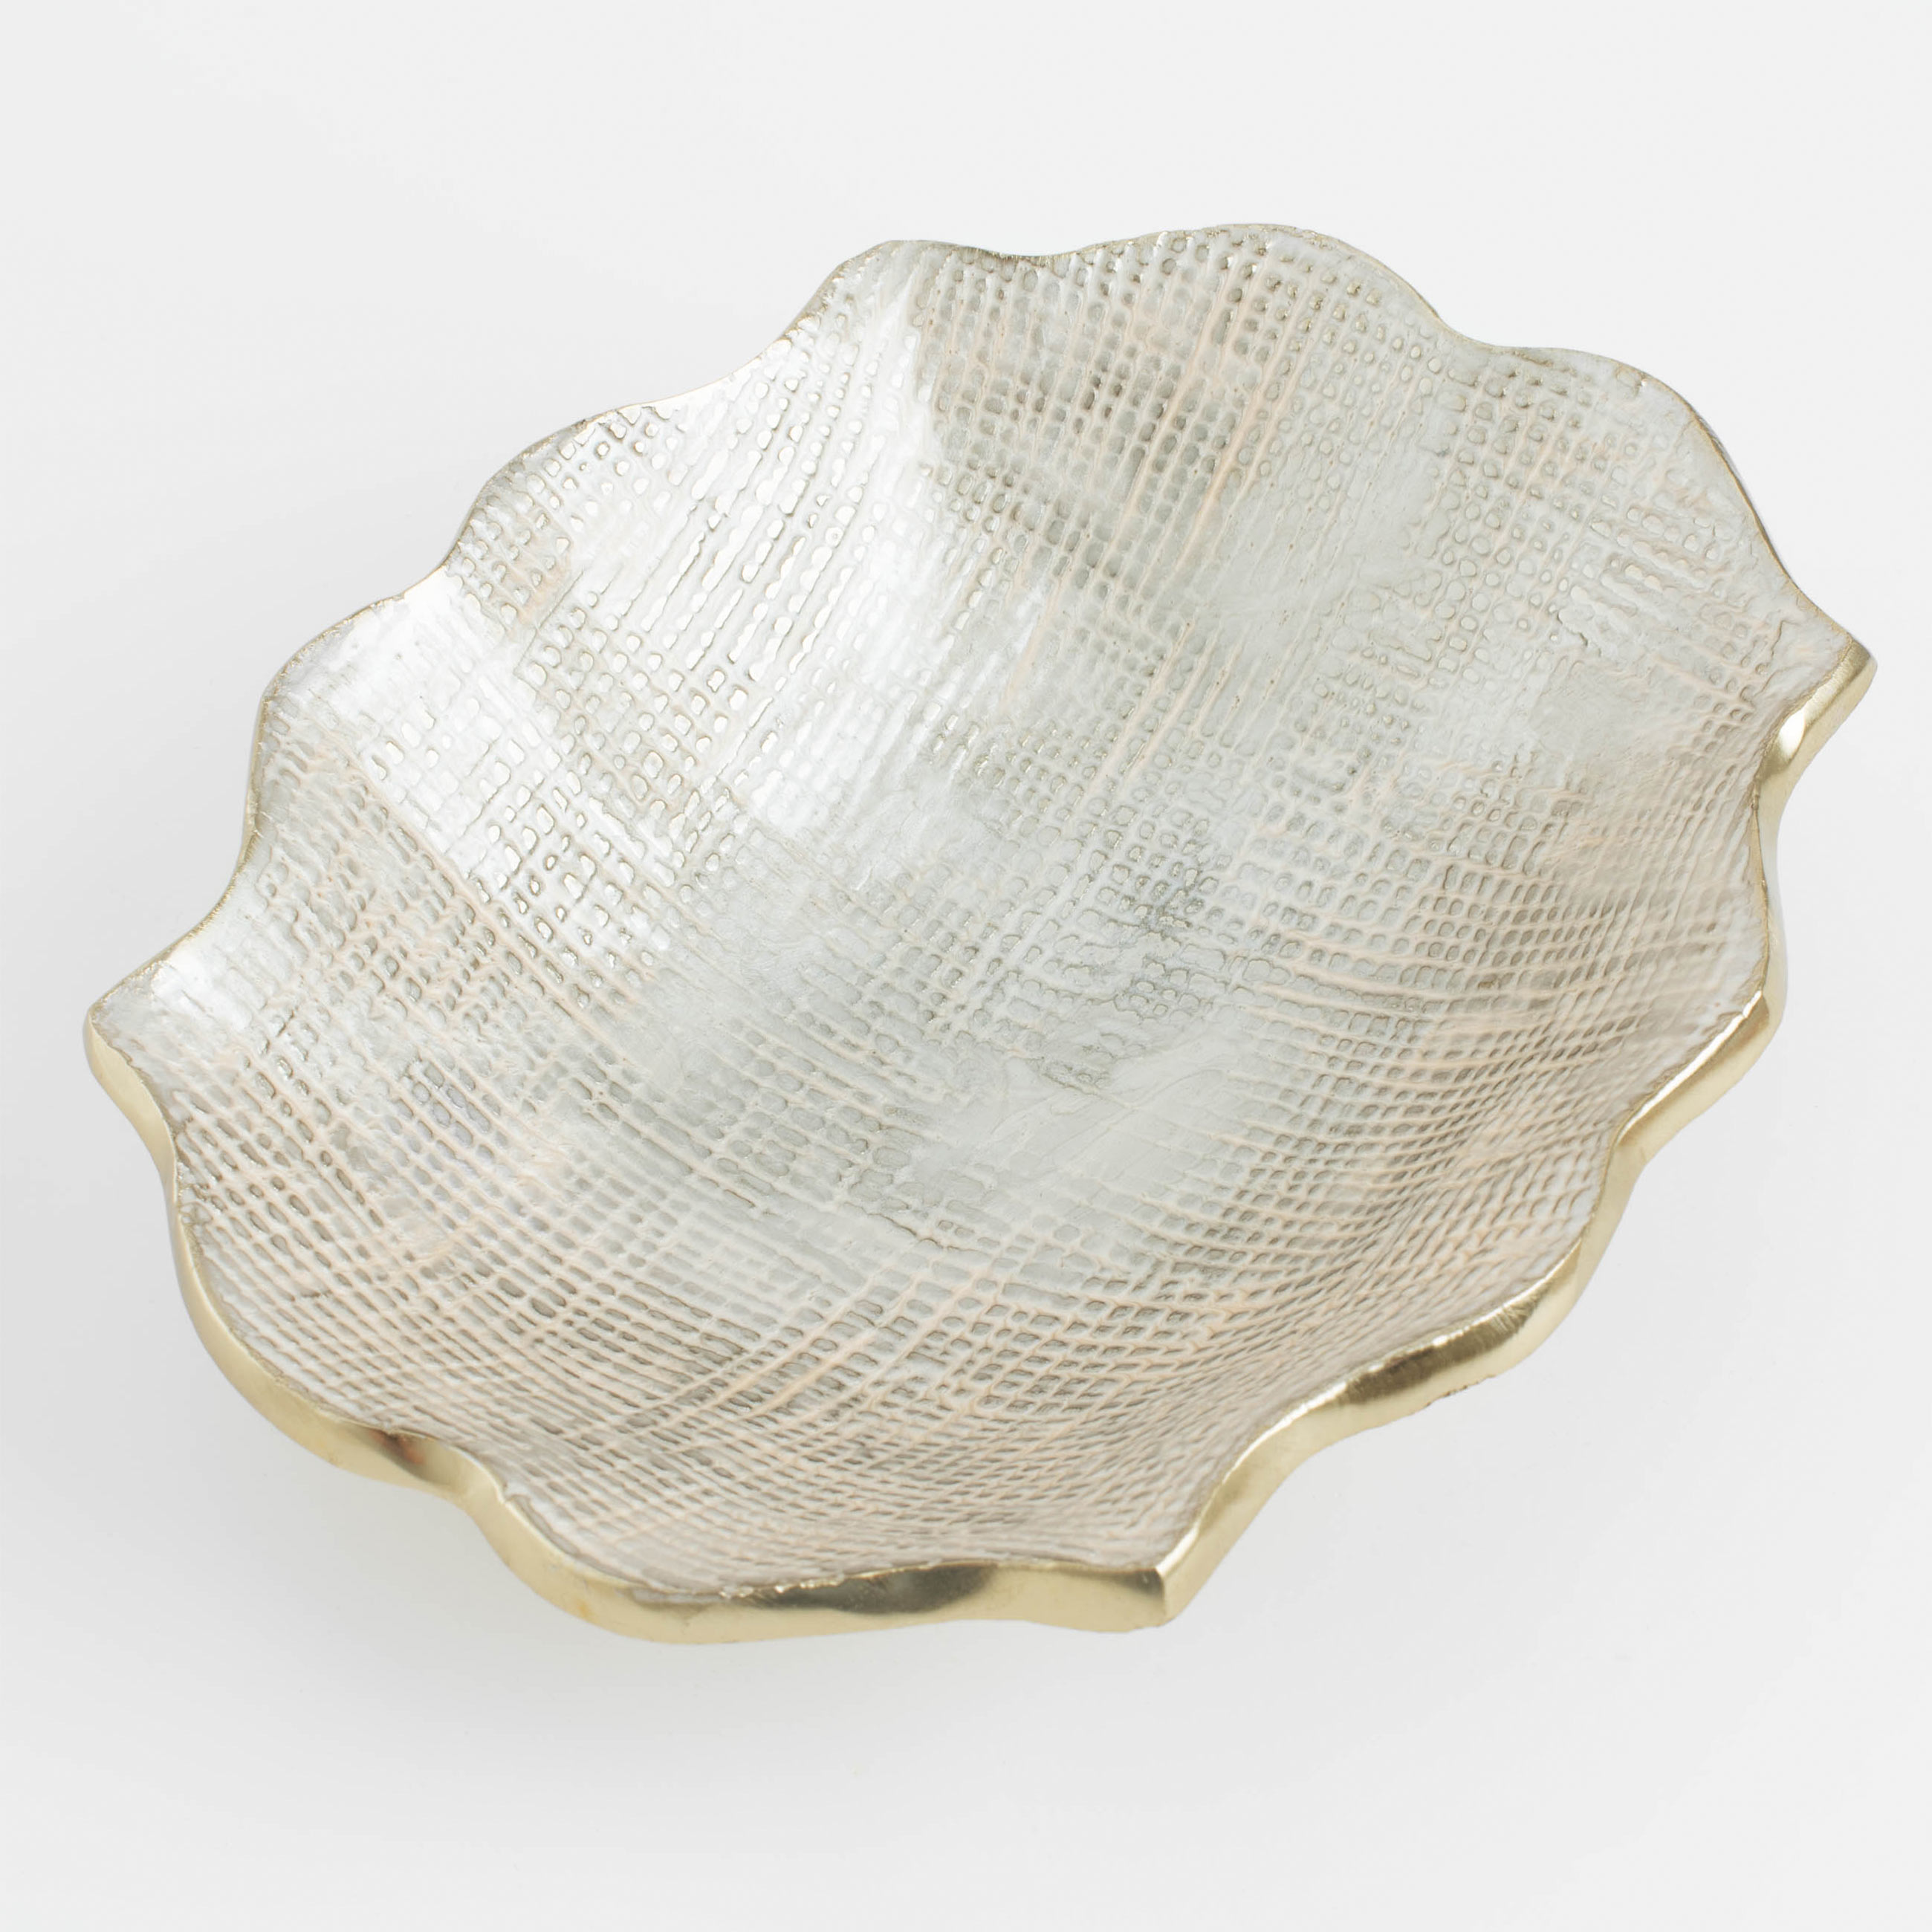 Decorative dish, 22x18 cm, metal, beige-gold, Curves, Paradise garden изображение № 5